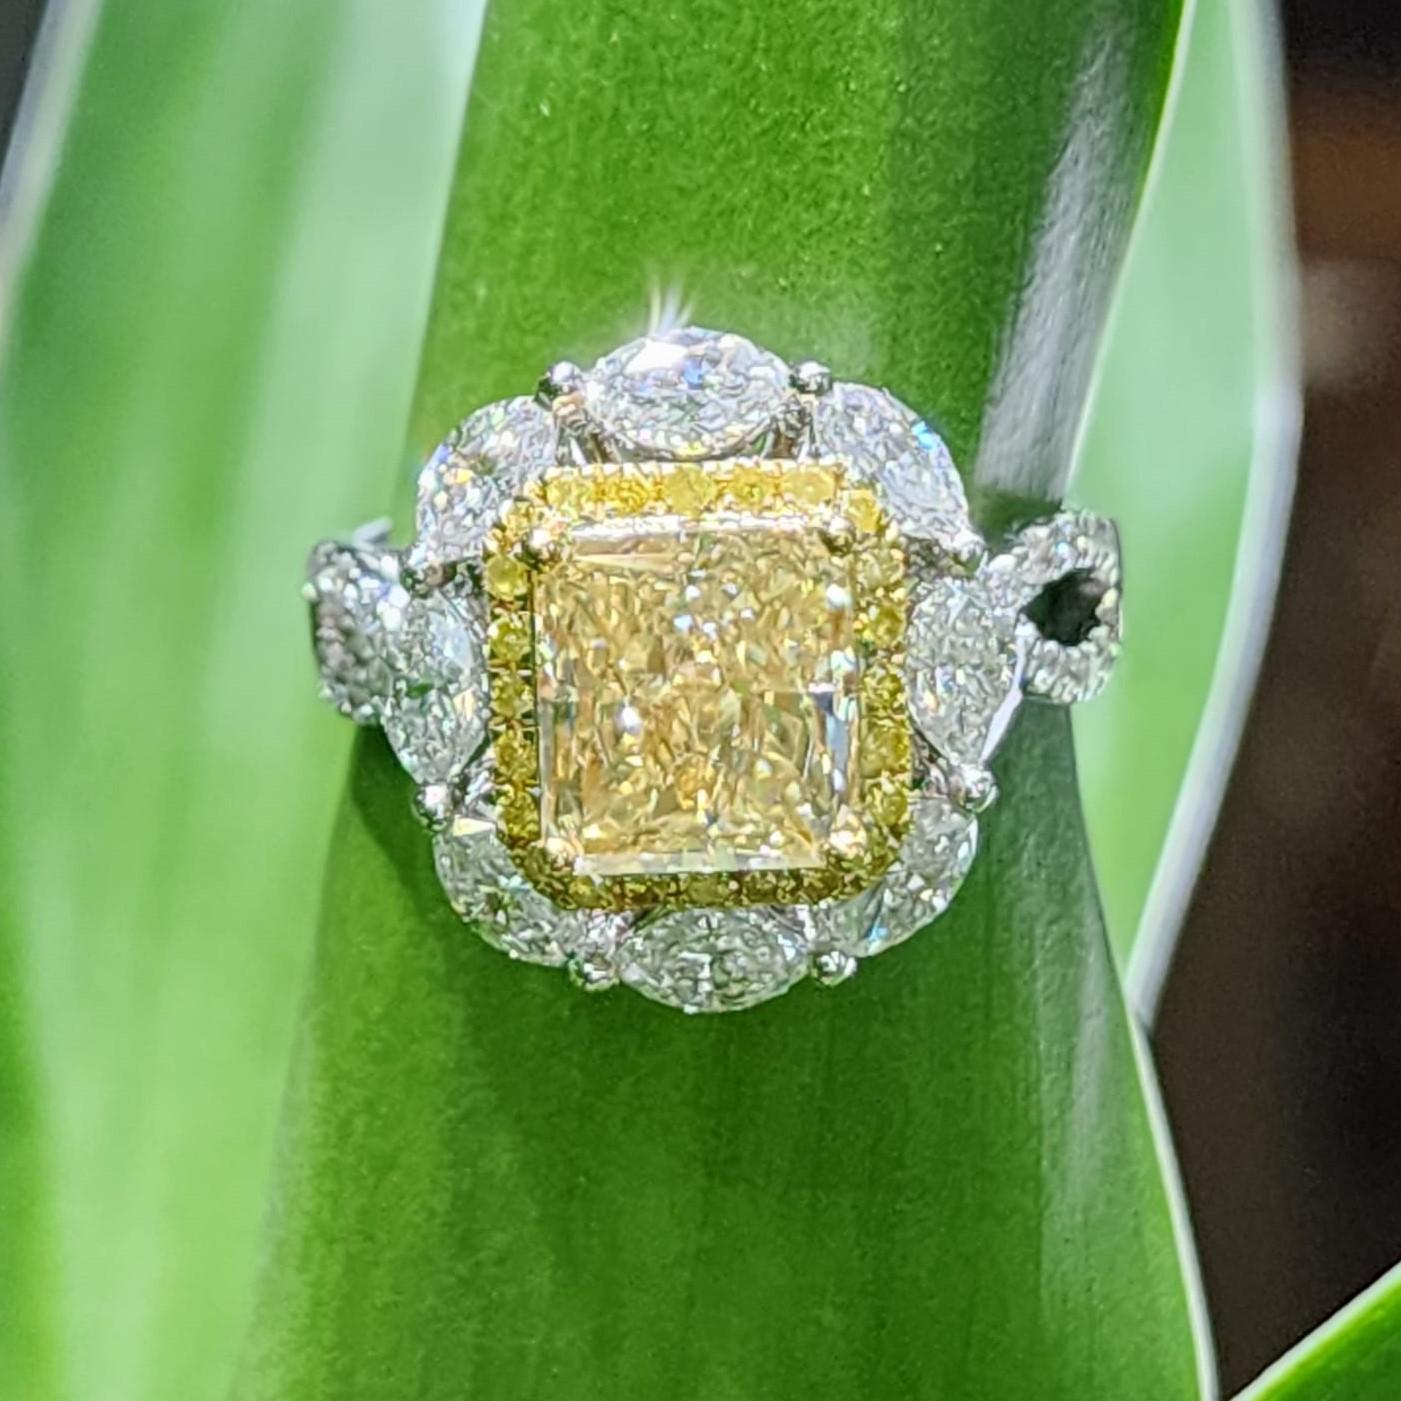 IGI Certified 3.65 Total Carat Fancy Light Yellow Diamond in 18K White Gold For Sale 1